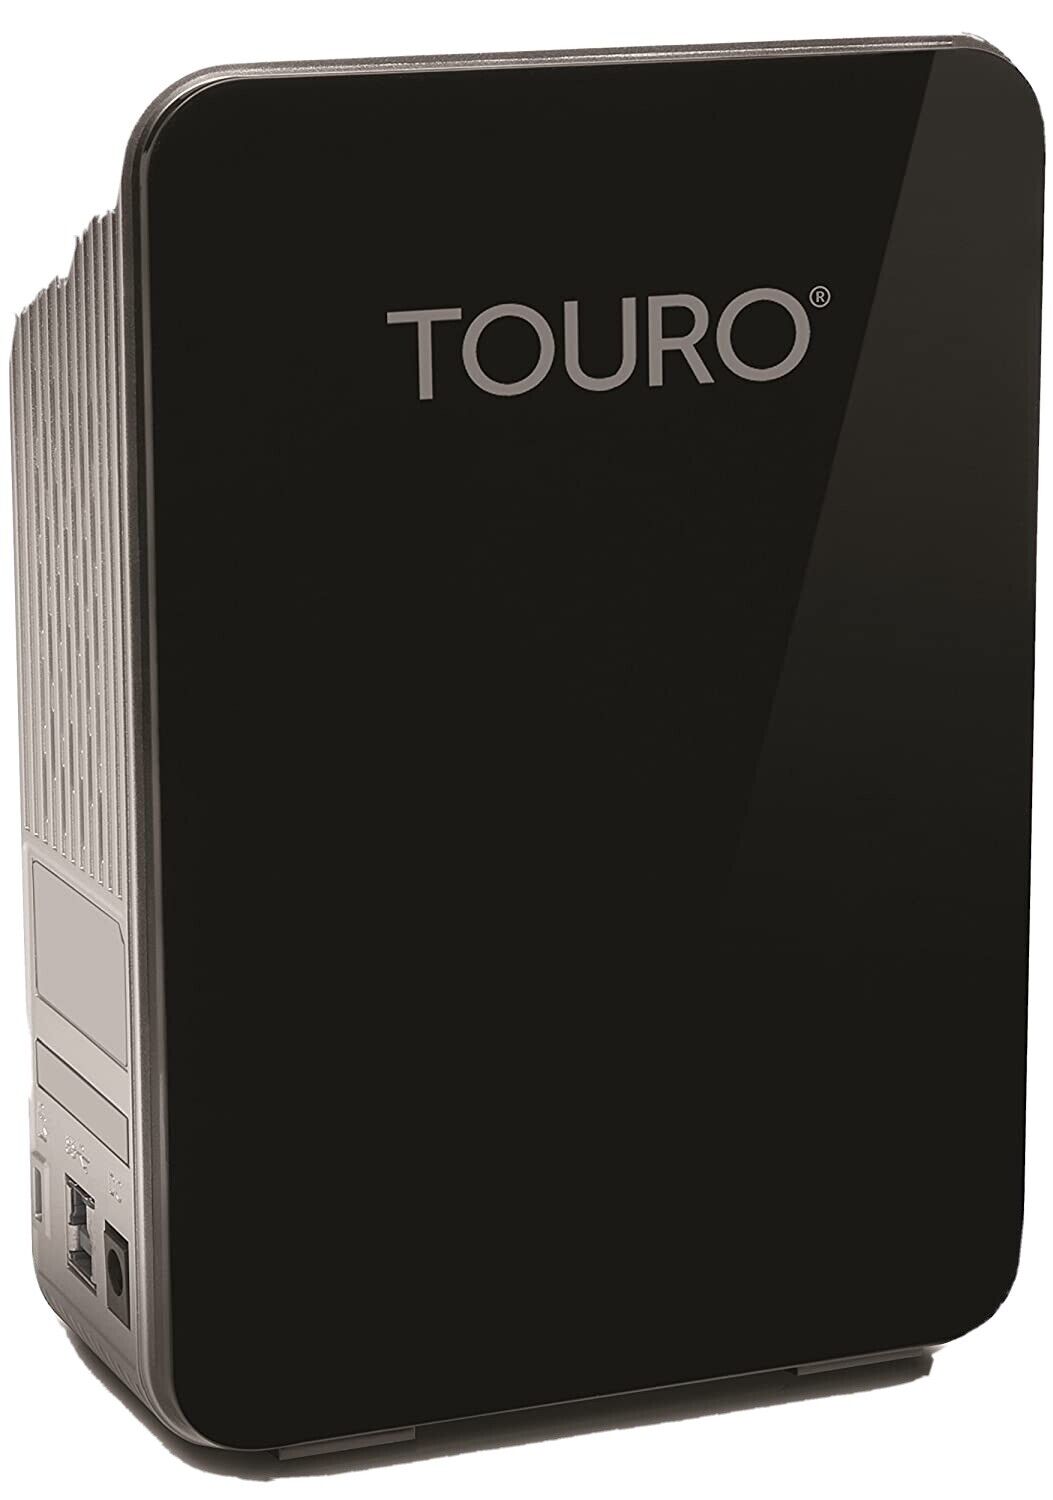 HGST Touro Desk DX3, 2 TB, USB 3.0 External Hard Disk Drive a Western Digital Co